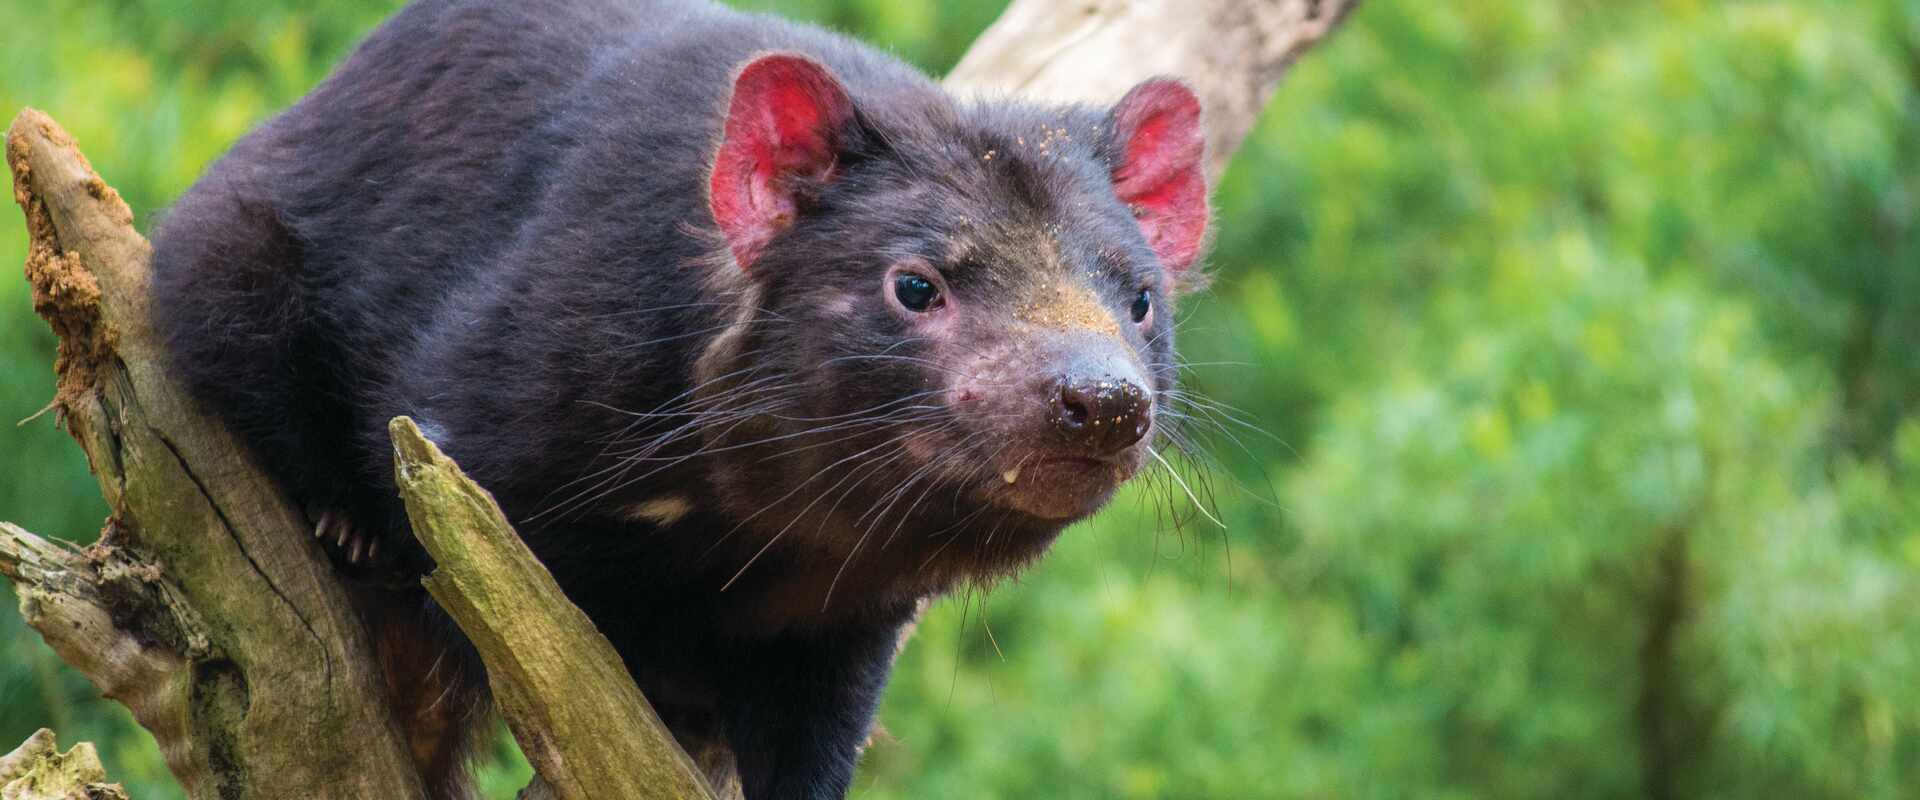 A close-up shot of a Tasmanian devil sitting in a tree